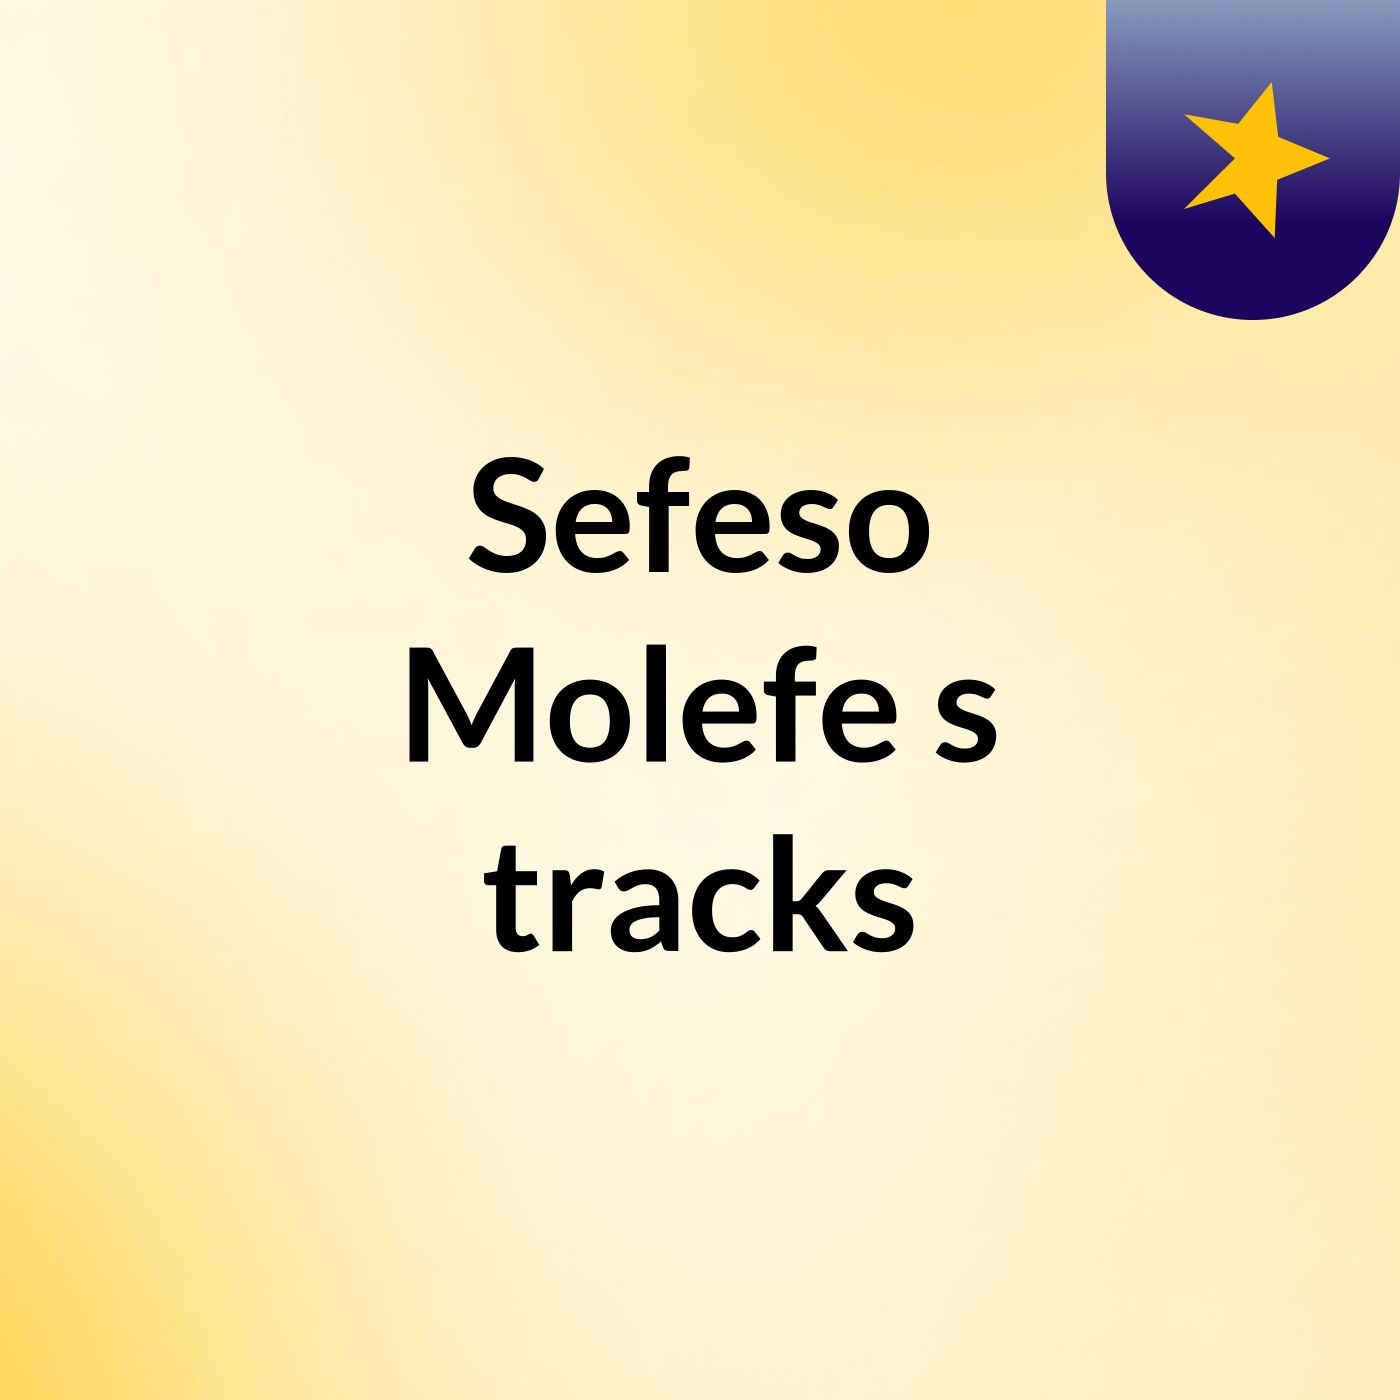 Sefeso Molefe's tracks